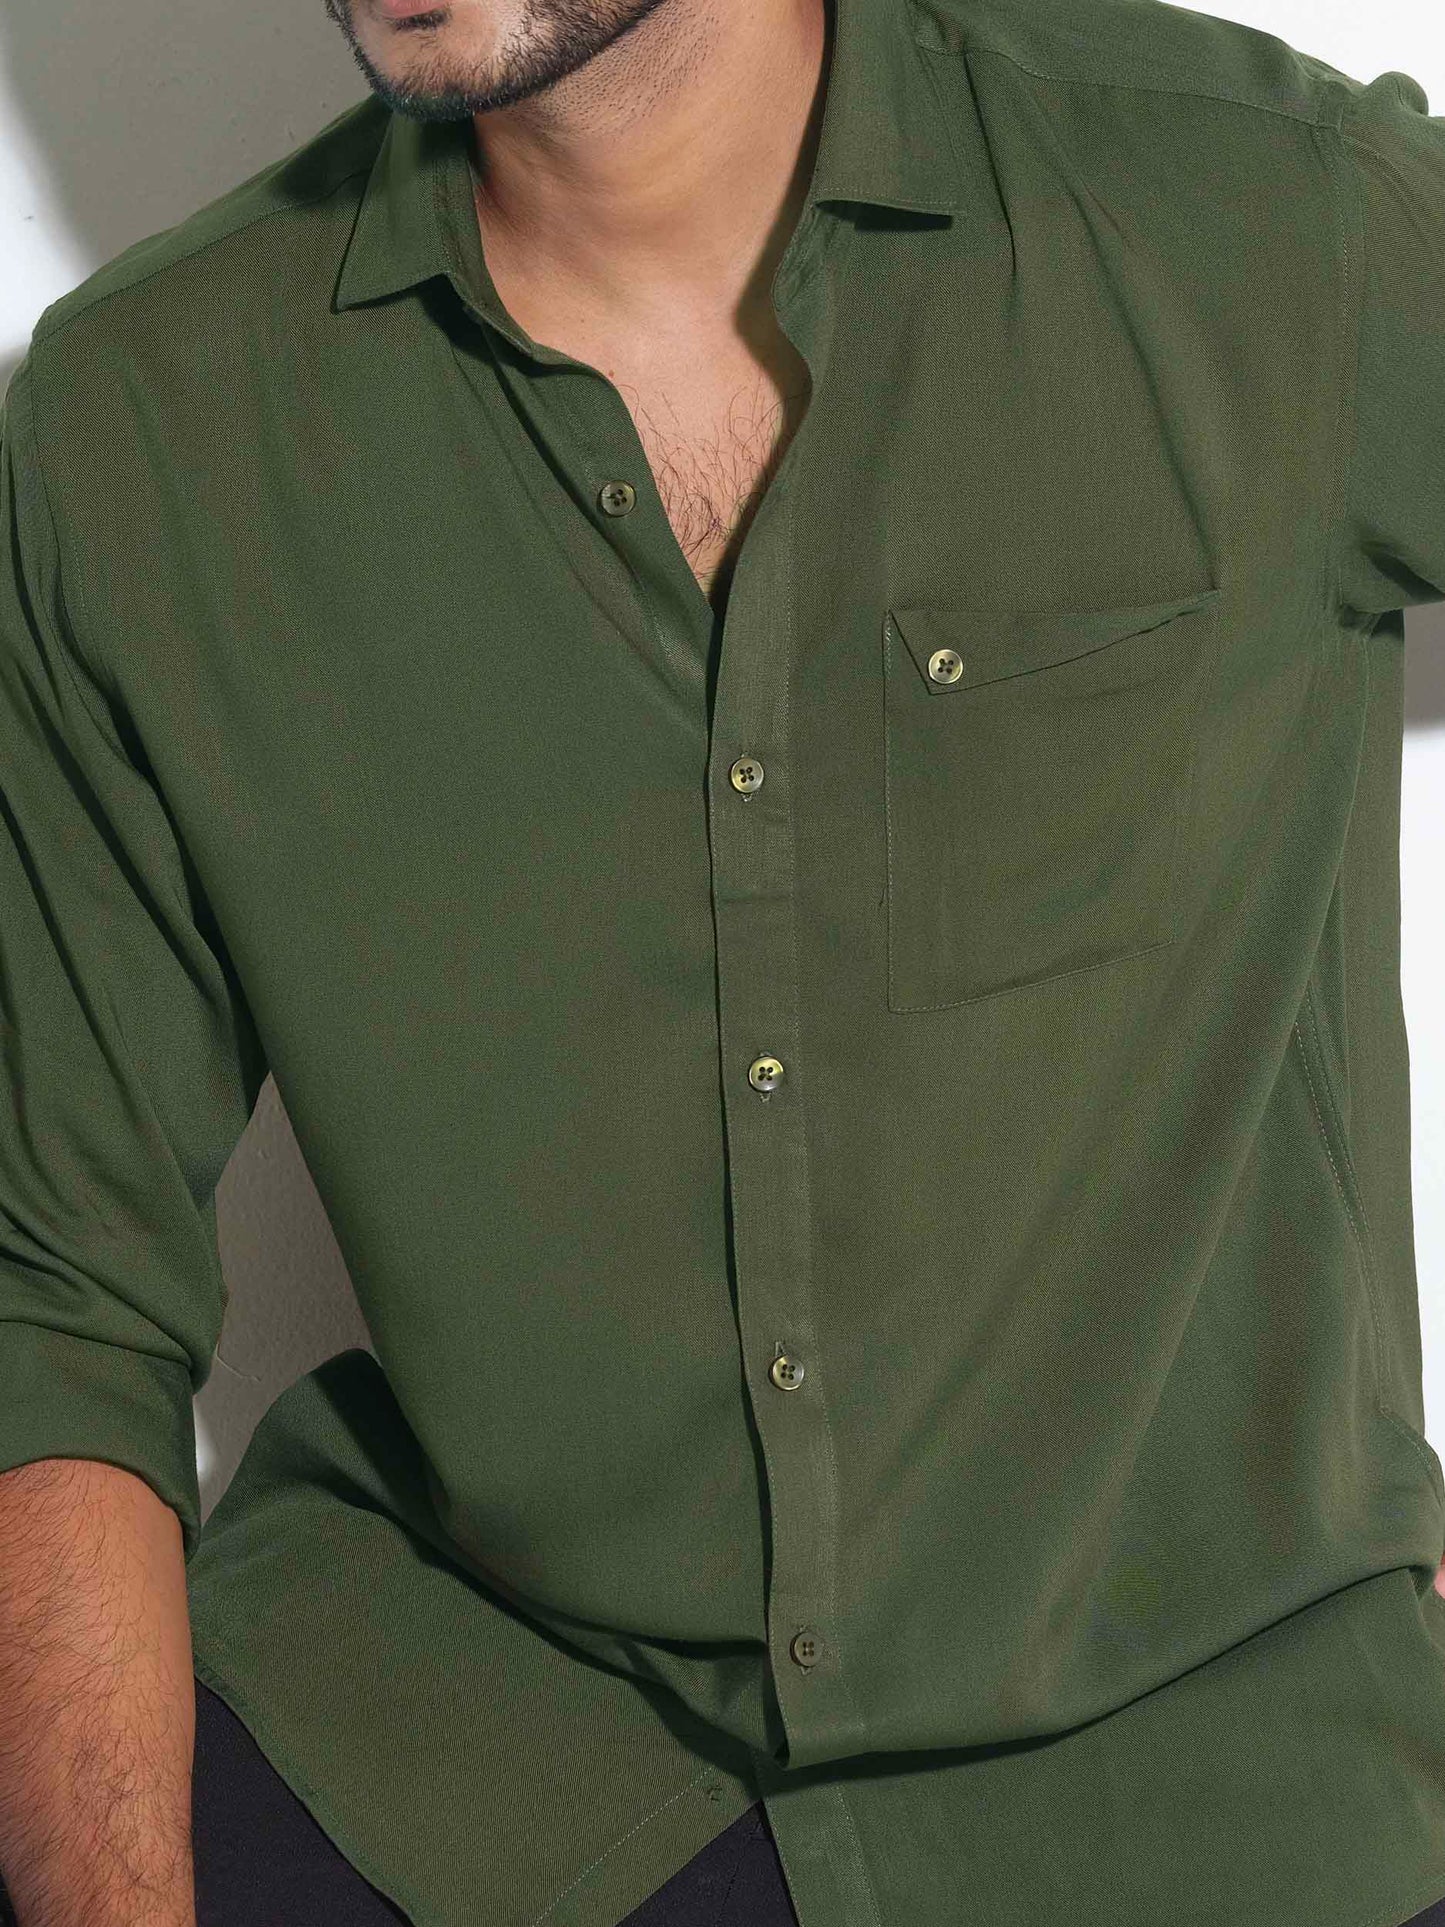 Olive color linen shirt